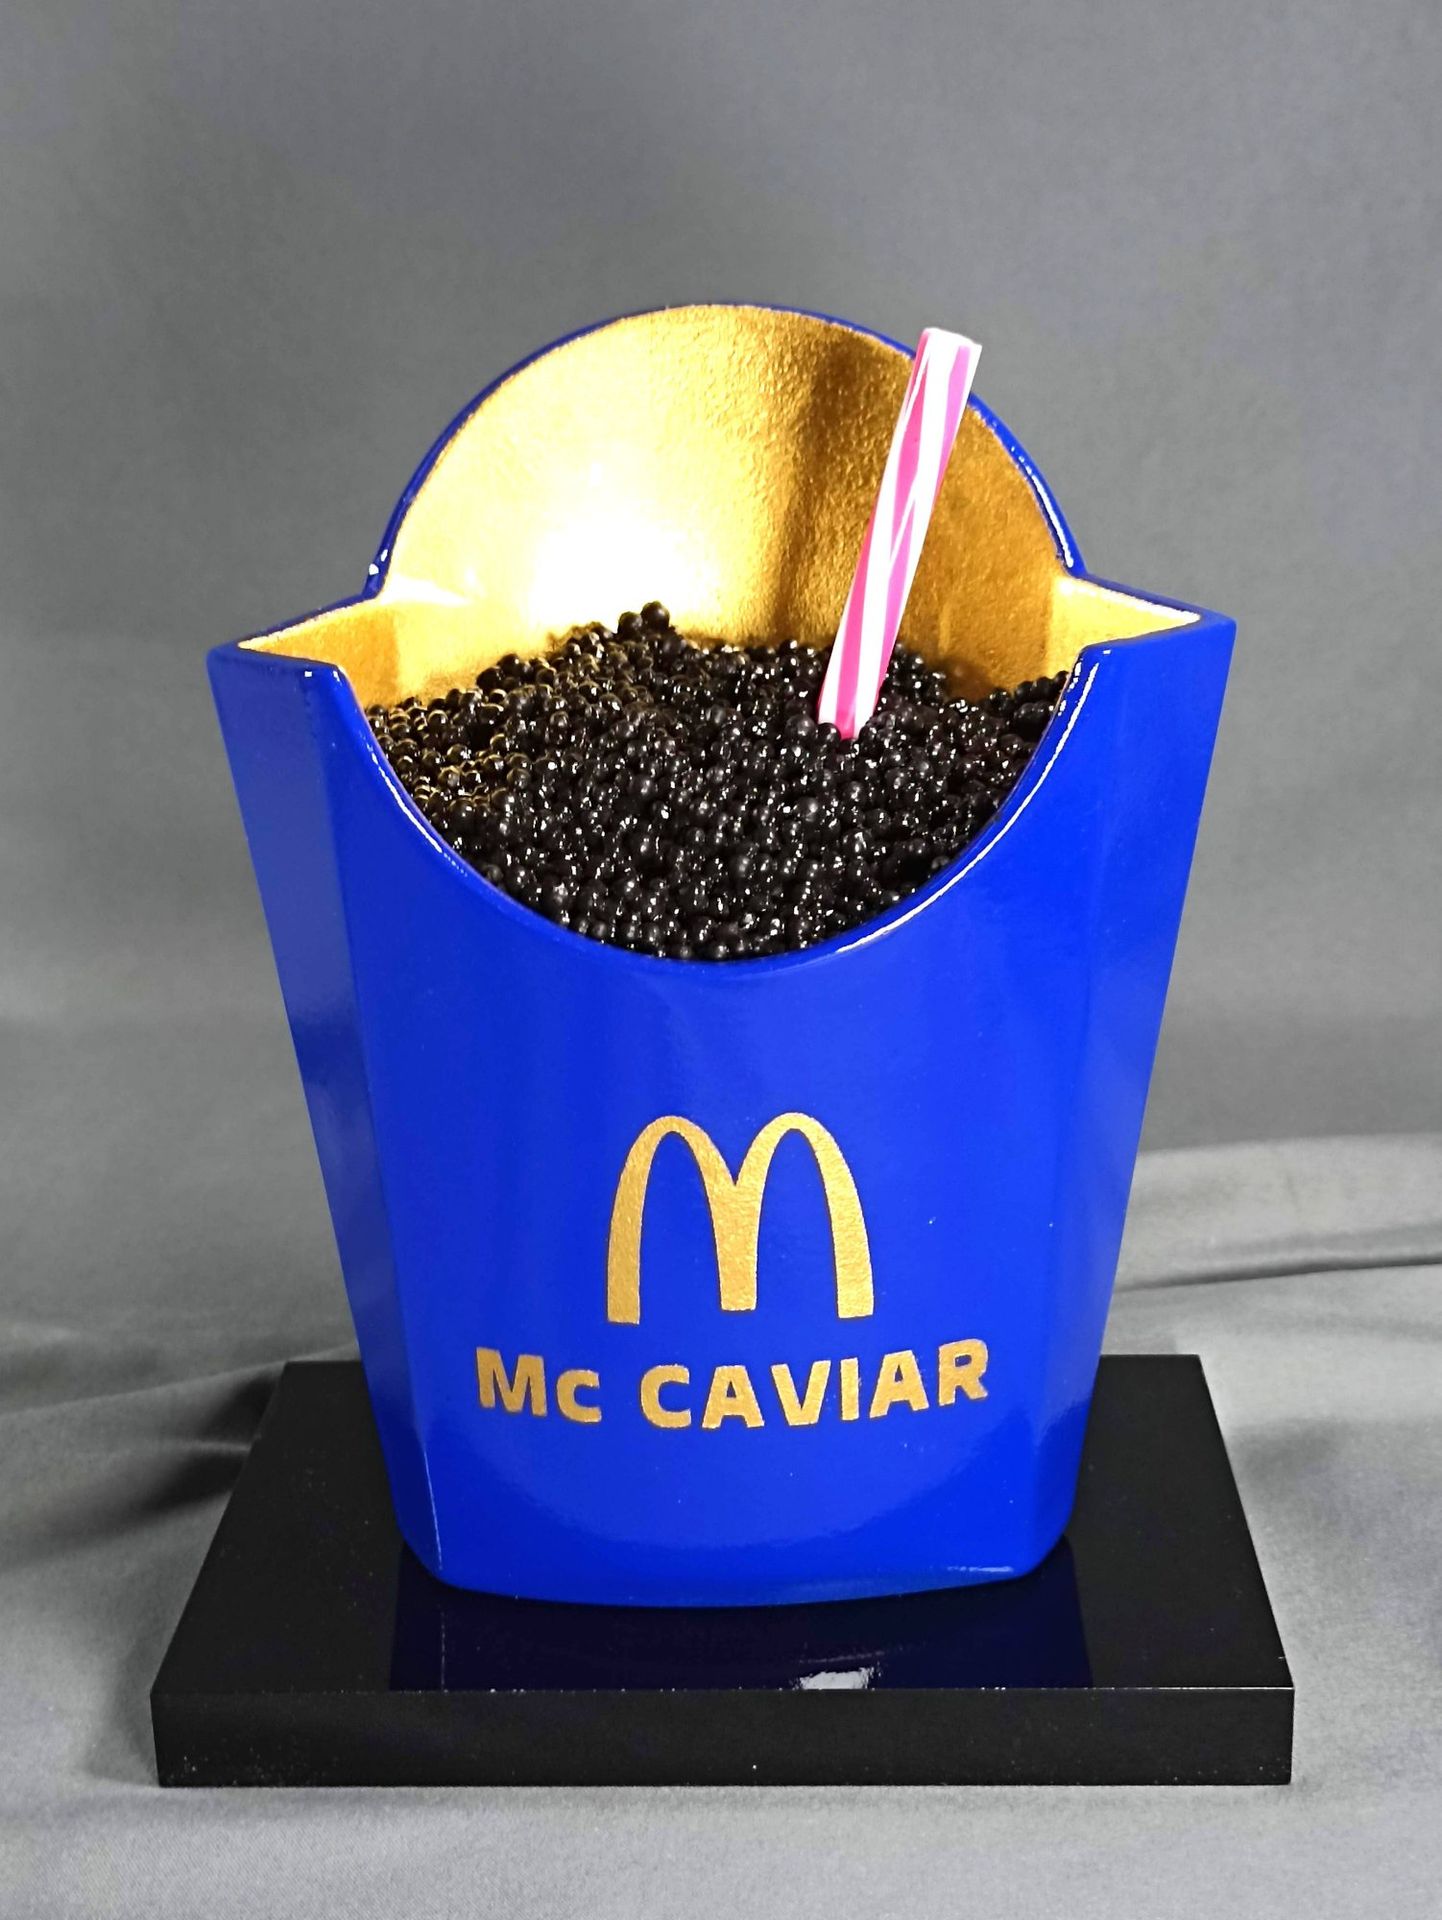 XTC MC CAVIAR 19CM GLOSSY BLUE - TURQUOISE STRAW 2/8
Große Tüte Mc Kaviar in Bla&hellip;